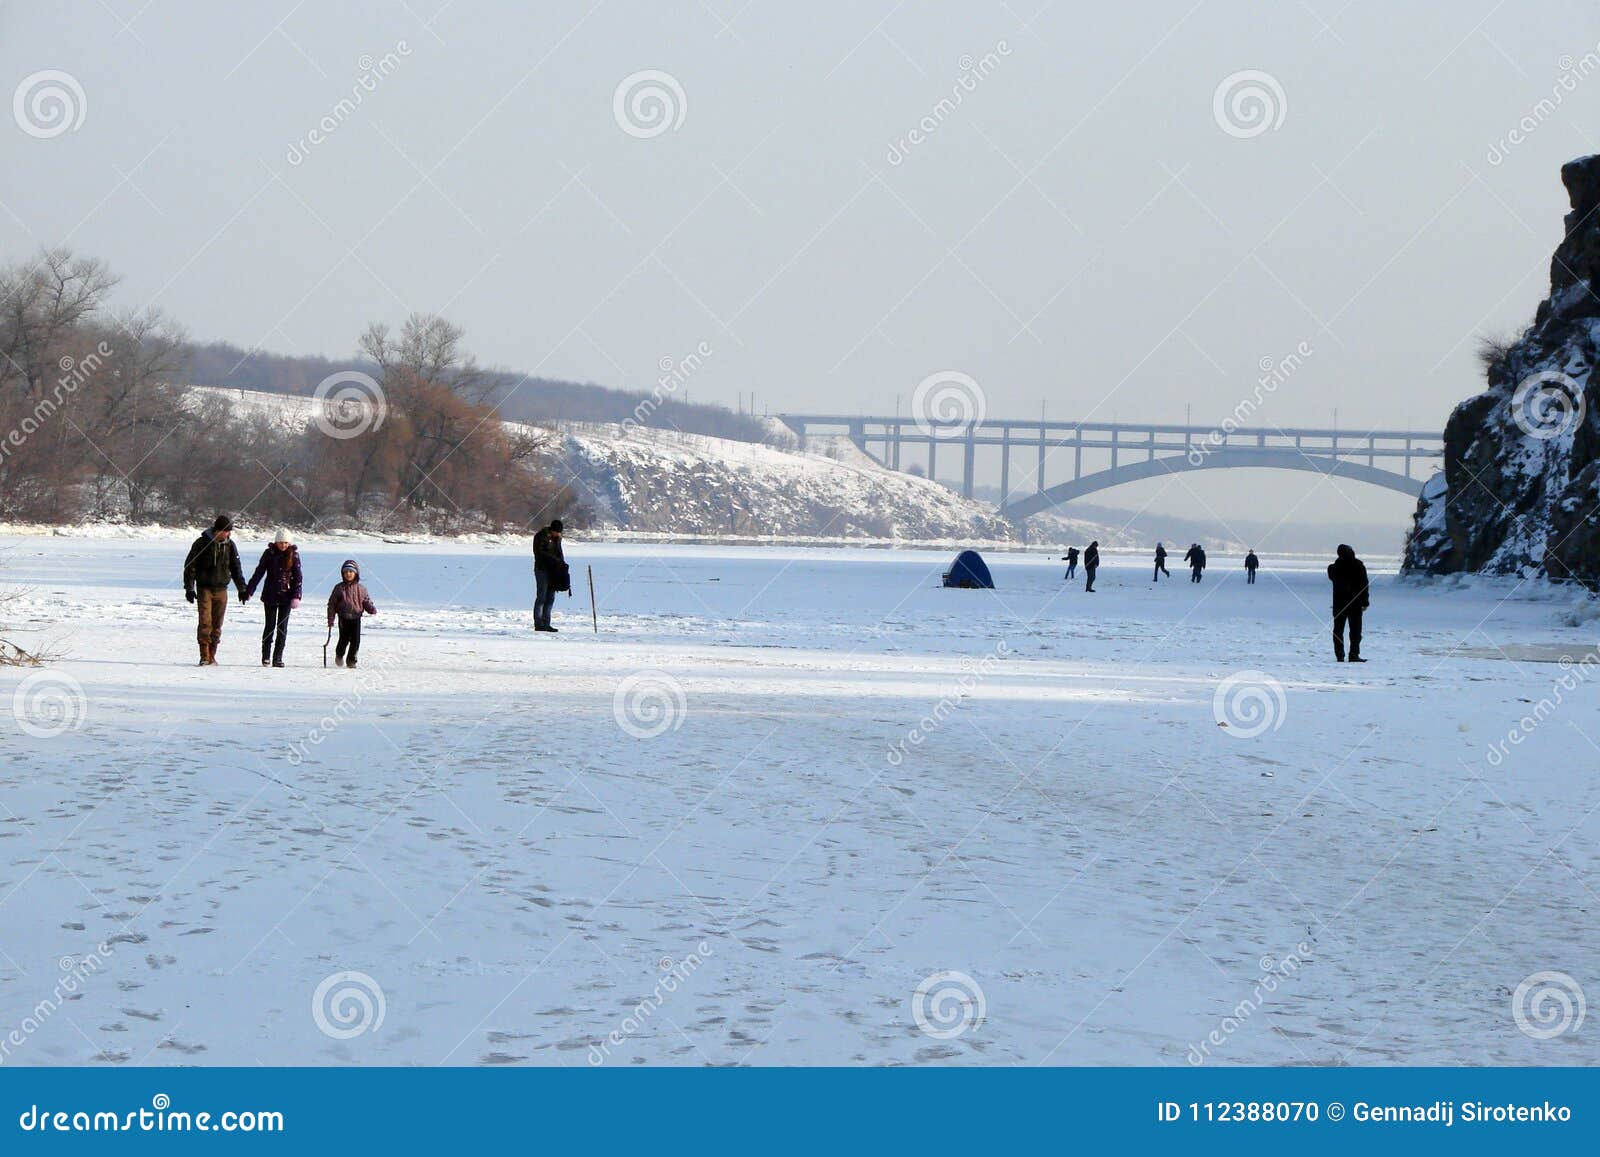 Ucrania en guerra - Página 4 Fun-walk-dangerous-ice-frozen-dnipro-river-clear-frosty-weekend-water-mirror-covered-ice-112388070